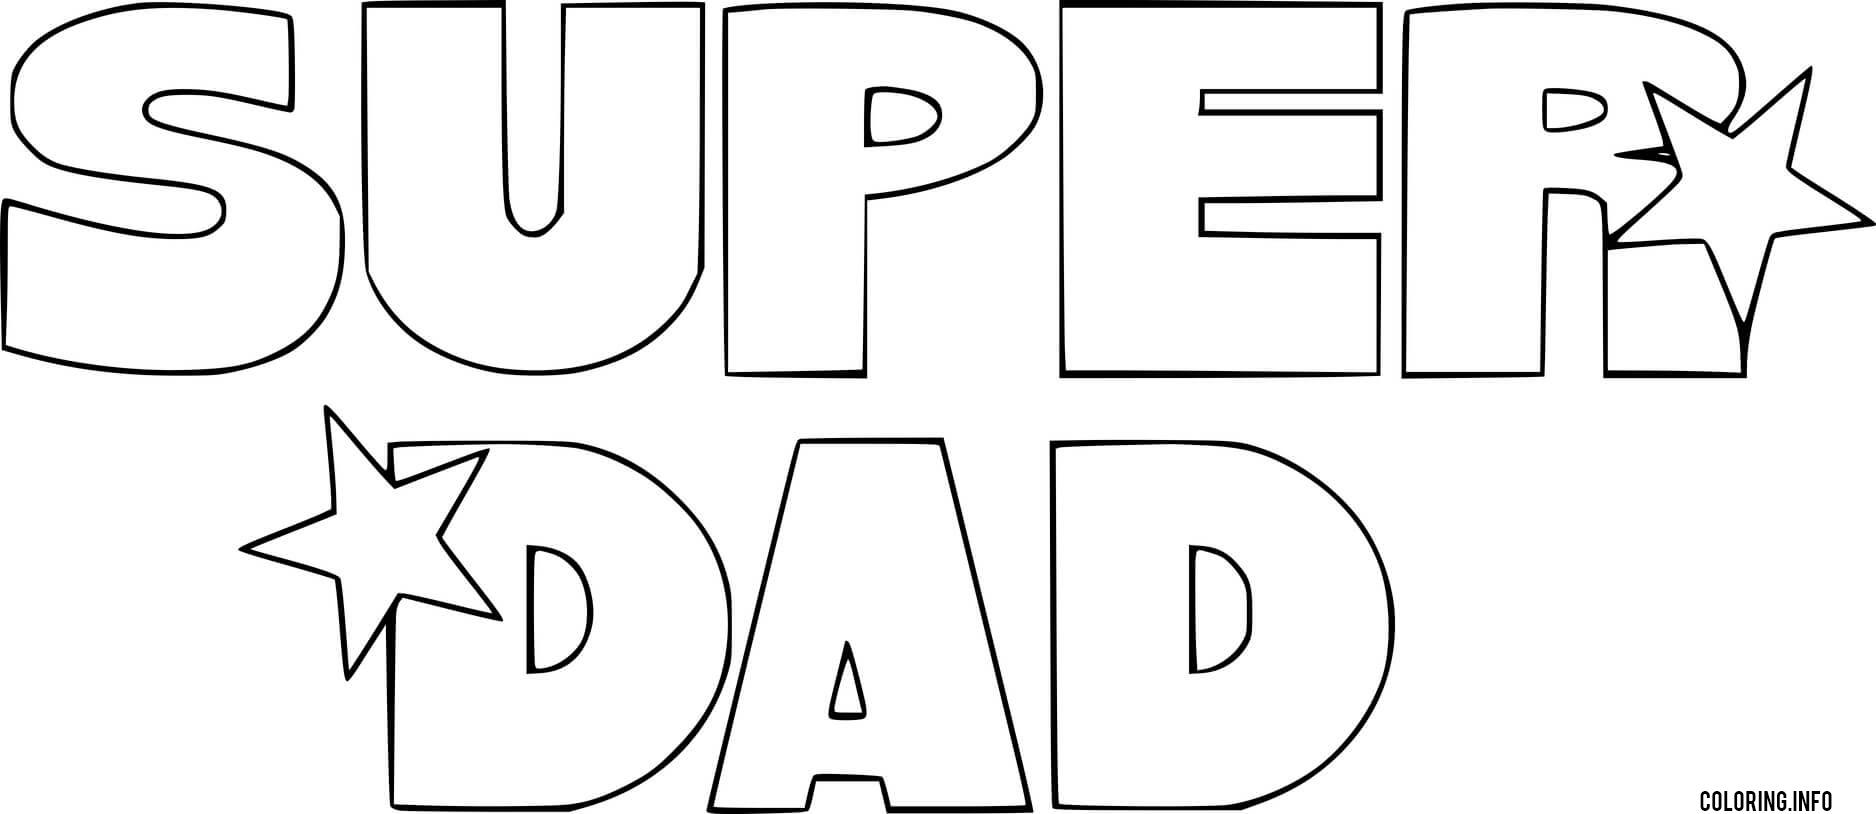 Super Dad Doodle coloring